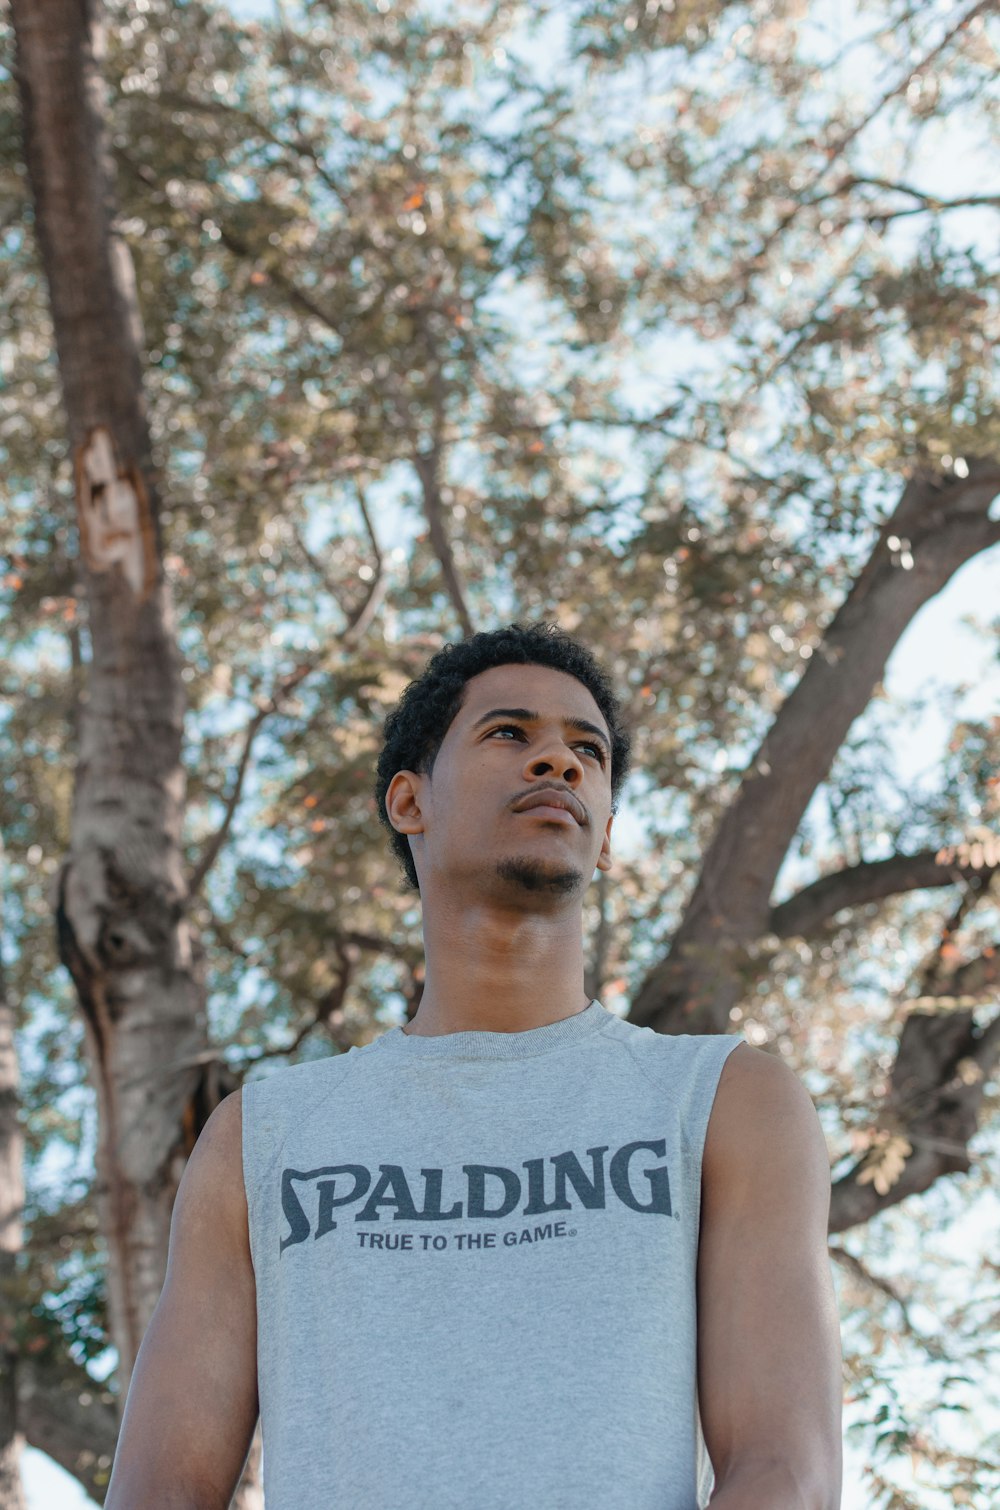 man wearing gray Spalding tank top standing near tall trees